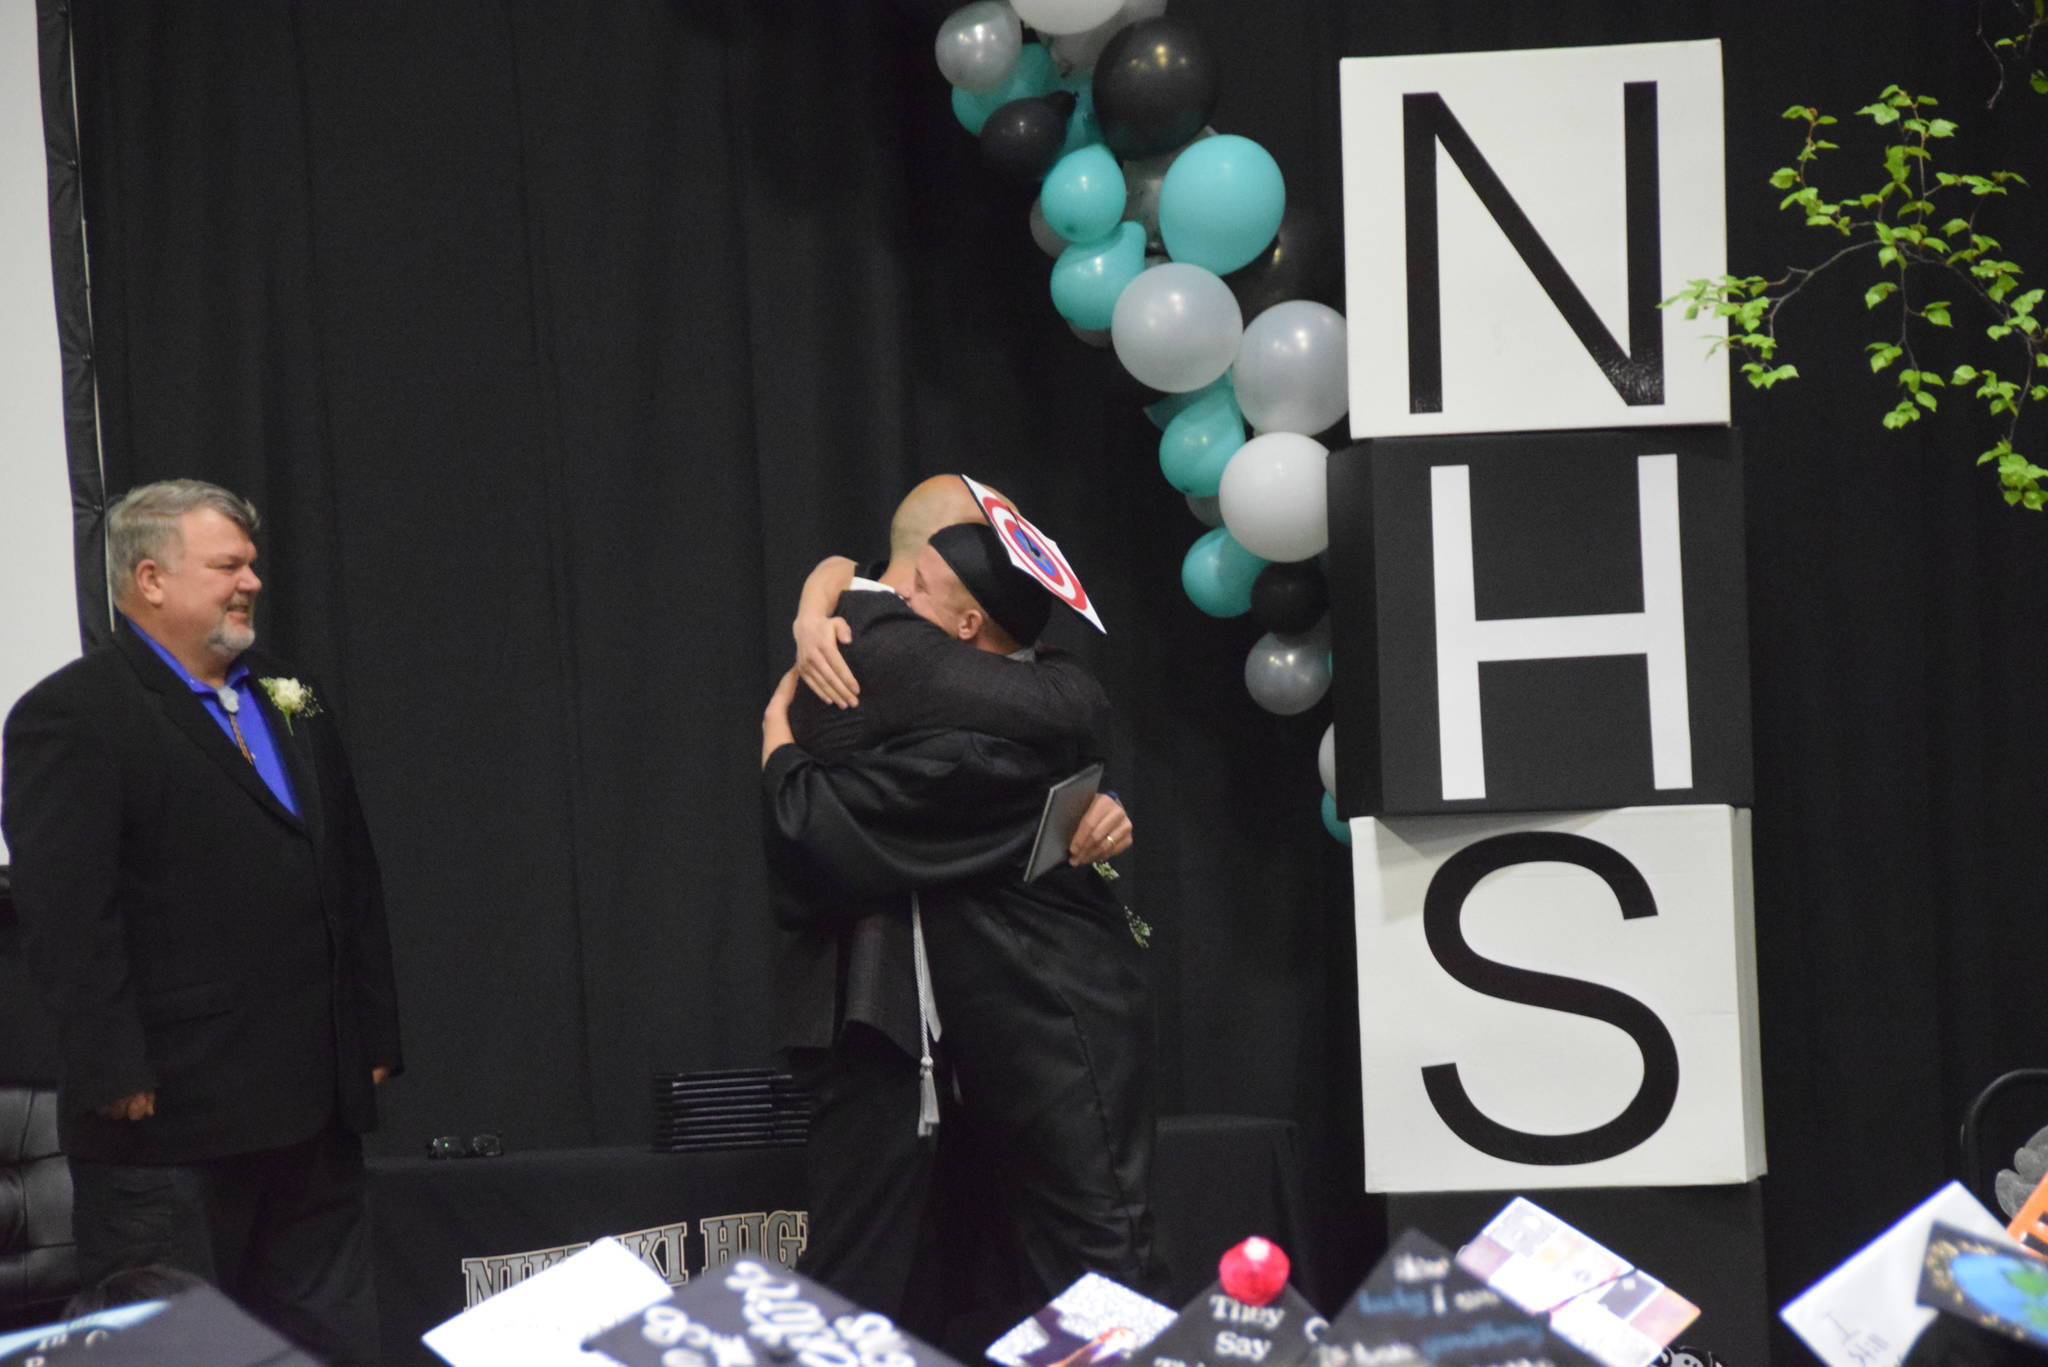 Justin Cox hugs principal Dan Carstens before receiving his diploma during the 2019 Nikiski High School graduation in Nikiski, Alaska on May 20, 2019. (Photo by Brian Mazurek/Peninsula Clarion)